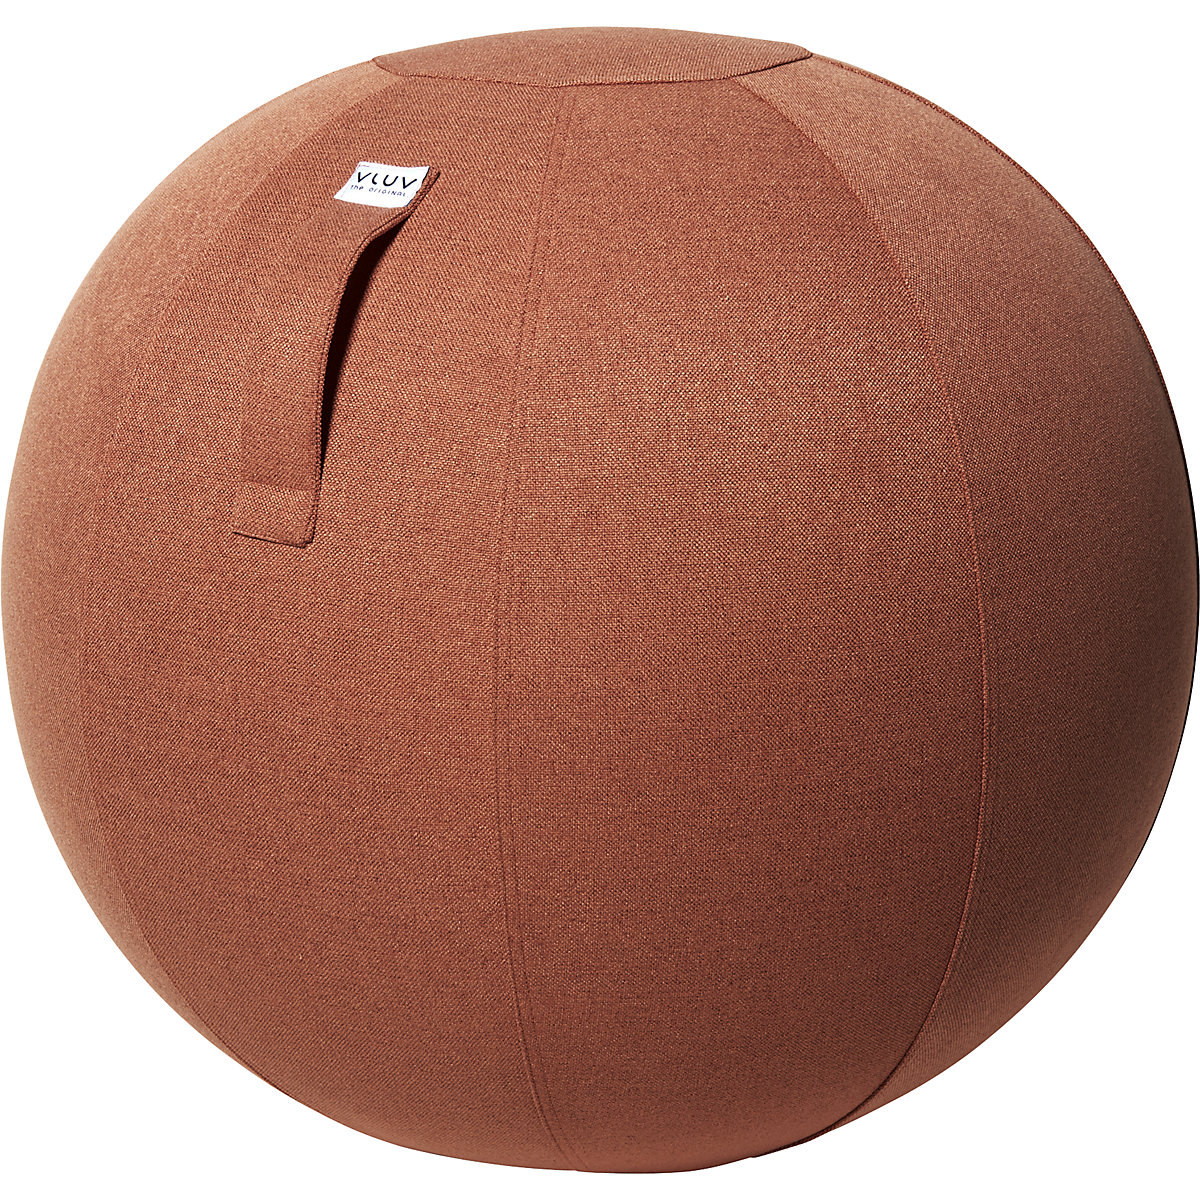 SOVA Swiss ball – VLUV, fabric cover in natural colours, 600 – 650 mm, salmon orange